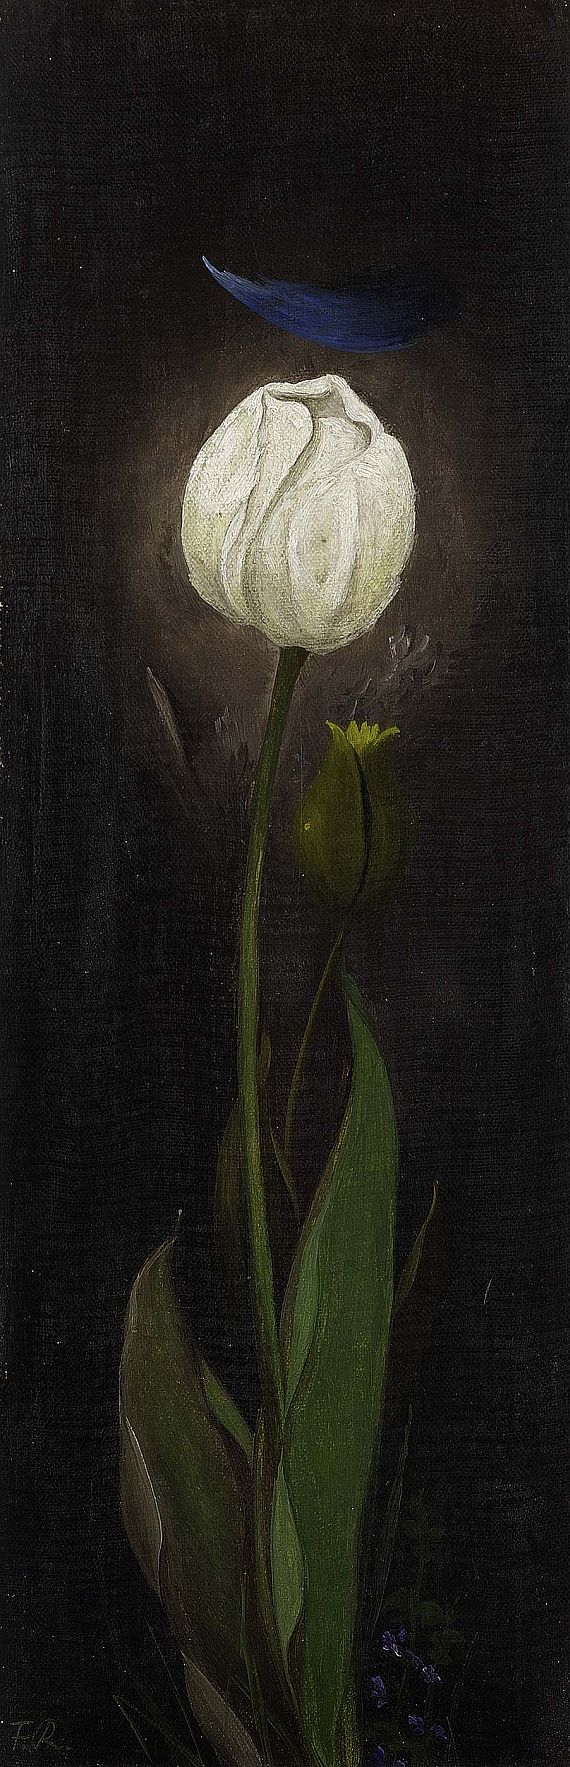 Franz Radziwill - Weiße Tulpe